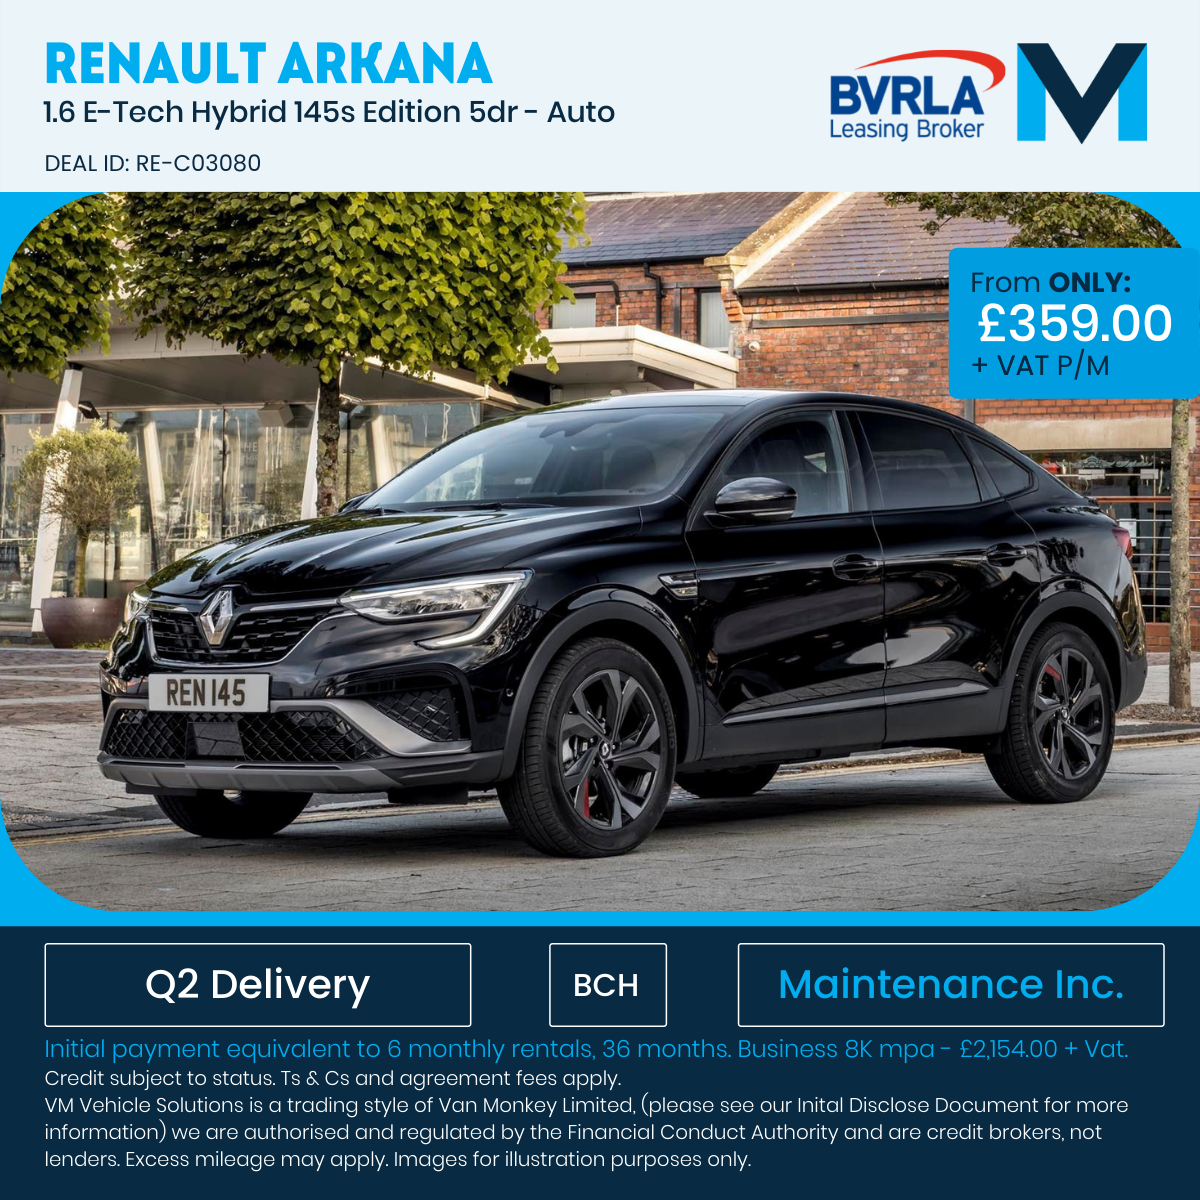 Renault Arkana Lease